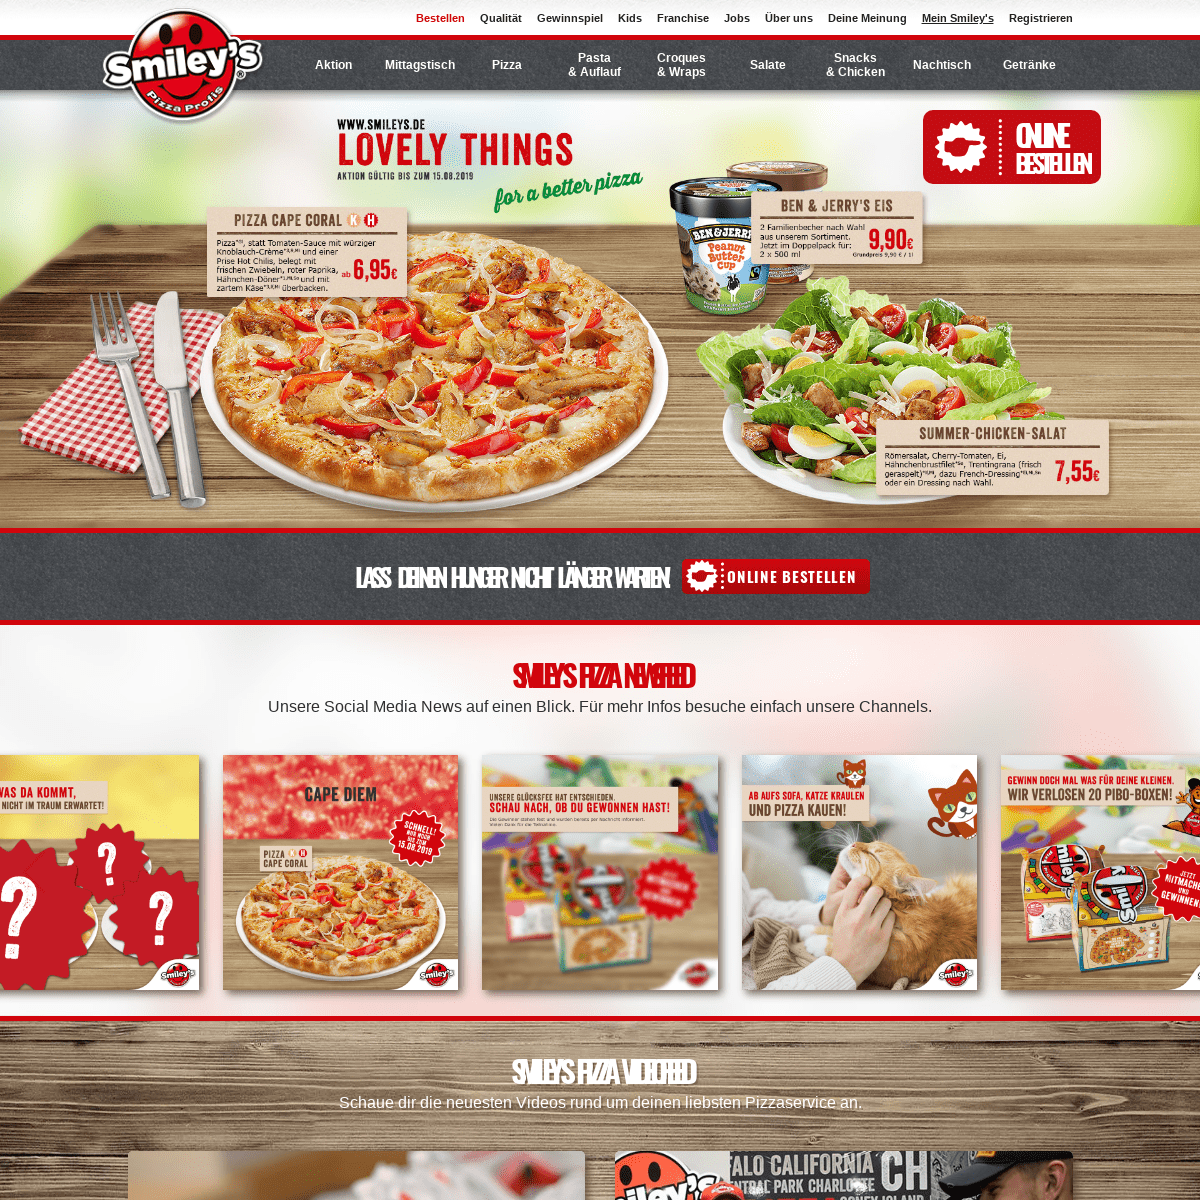 Smileys - Die Pizza Profis - Online Bestellen